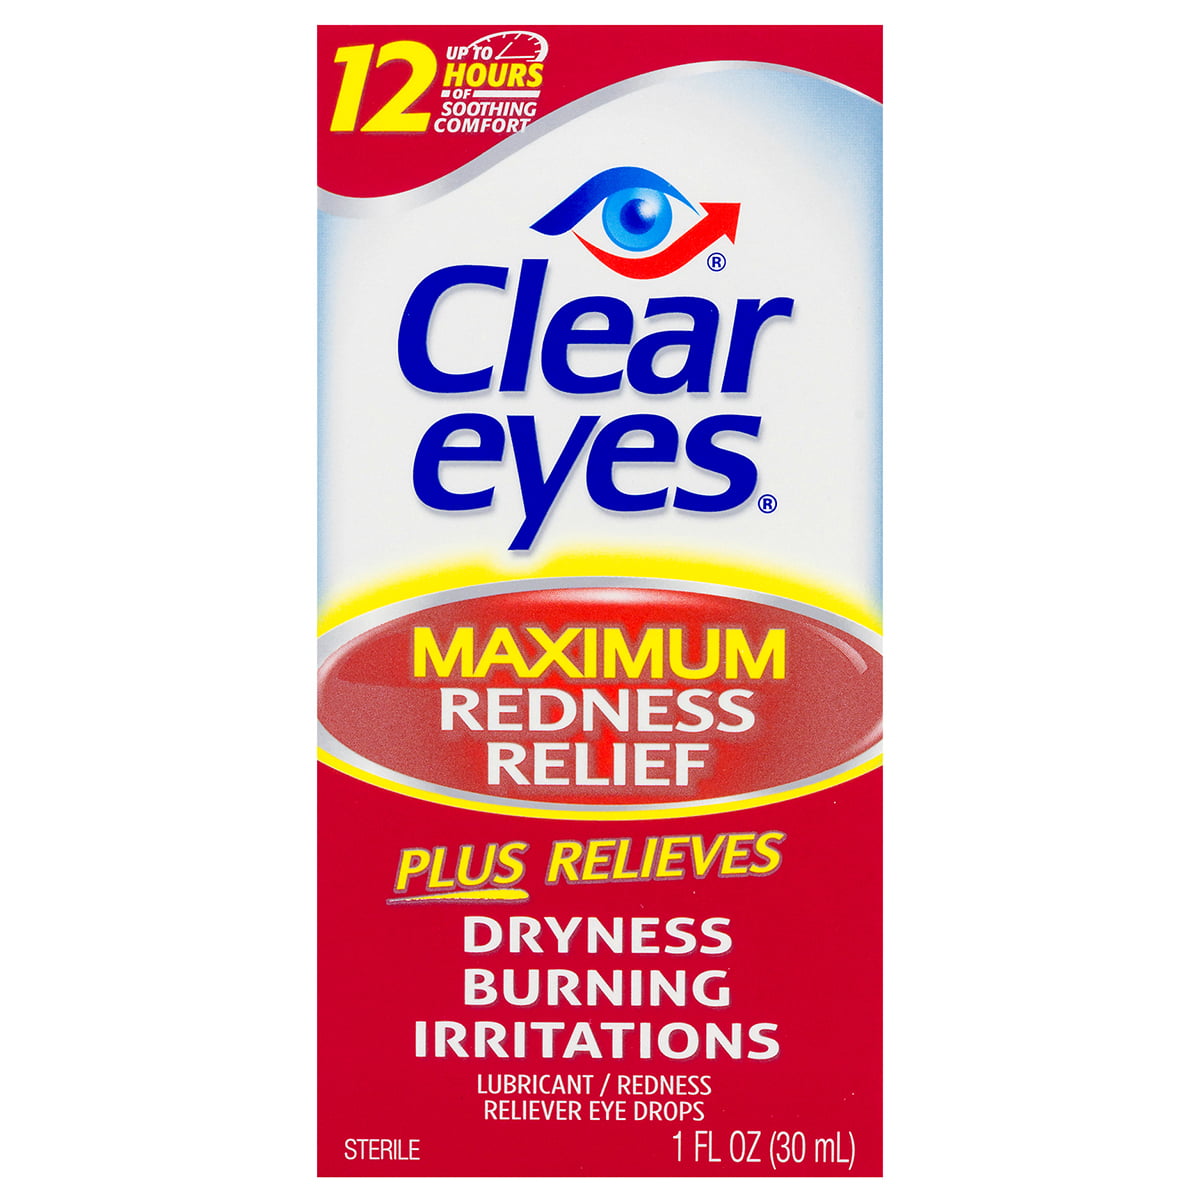 Clear eyes текст. Clear Eyes. Max strength redness Reliever Lubricant Eye Drops. Clear Eyes купить. Clean Eyes maximum redness купить.